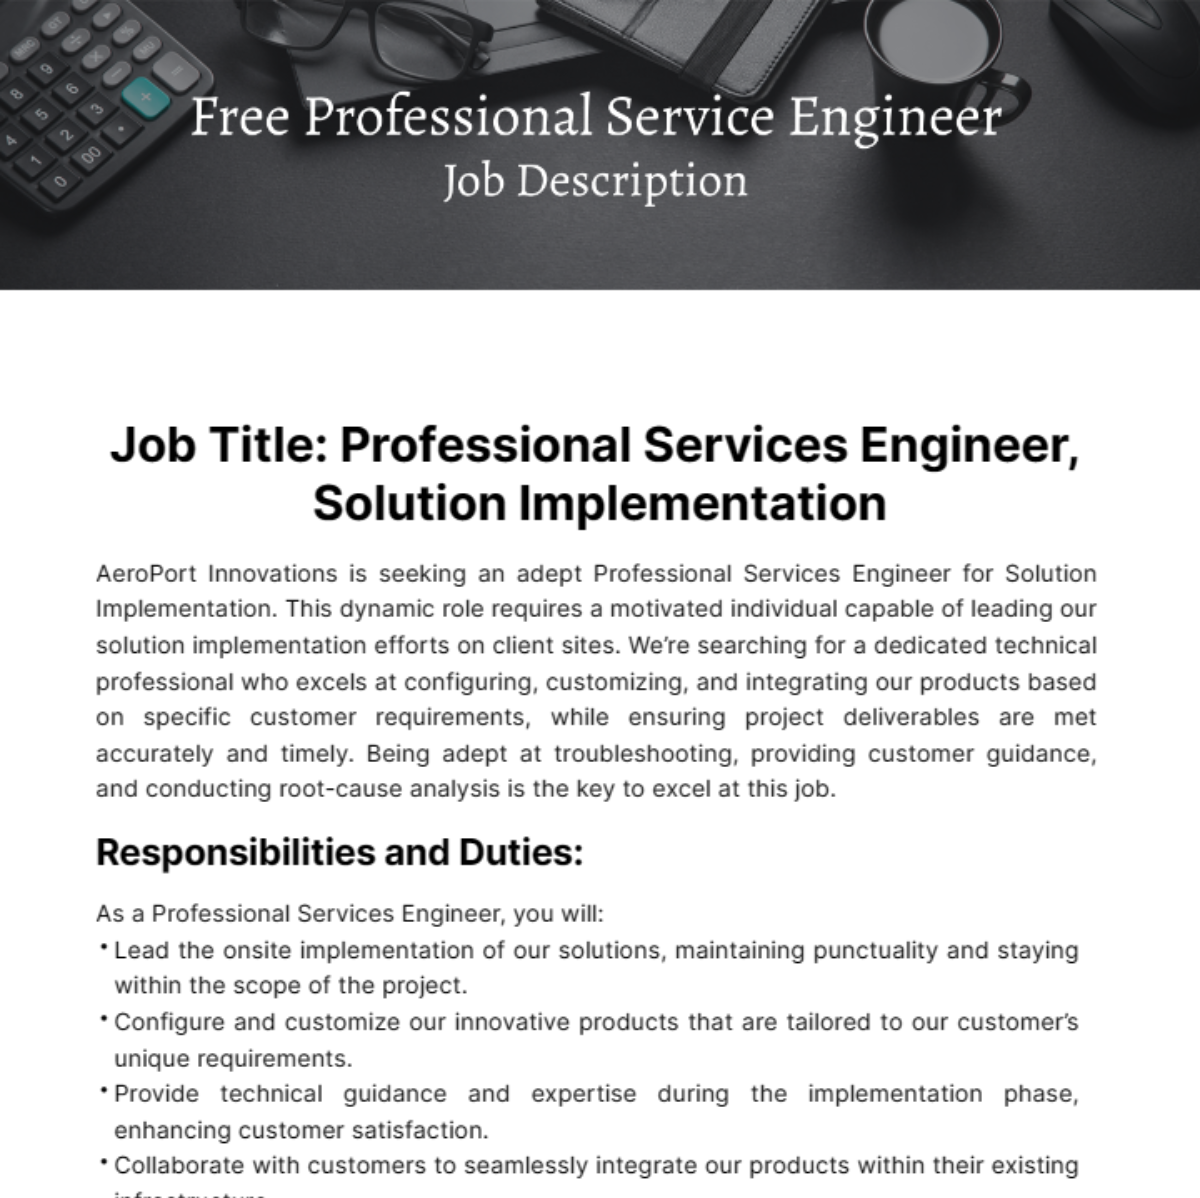 Free Professional Services Engineer Job Description Template